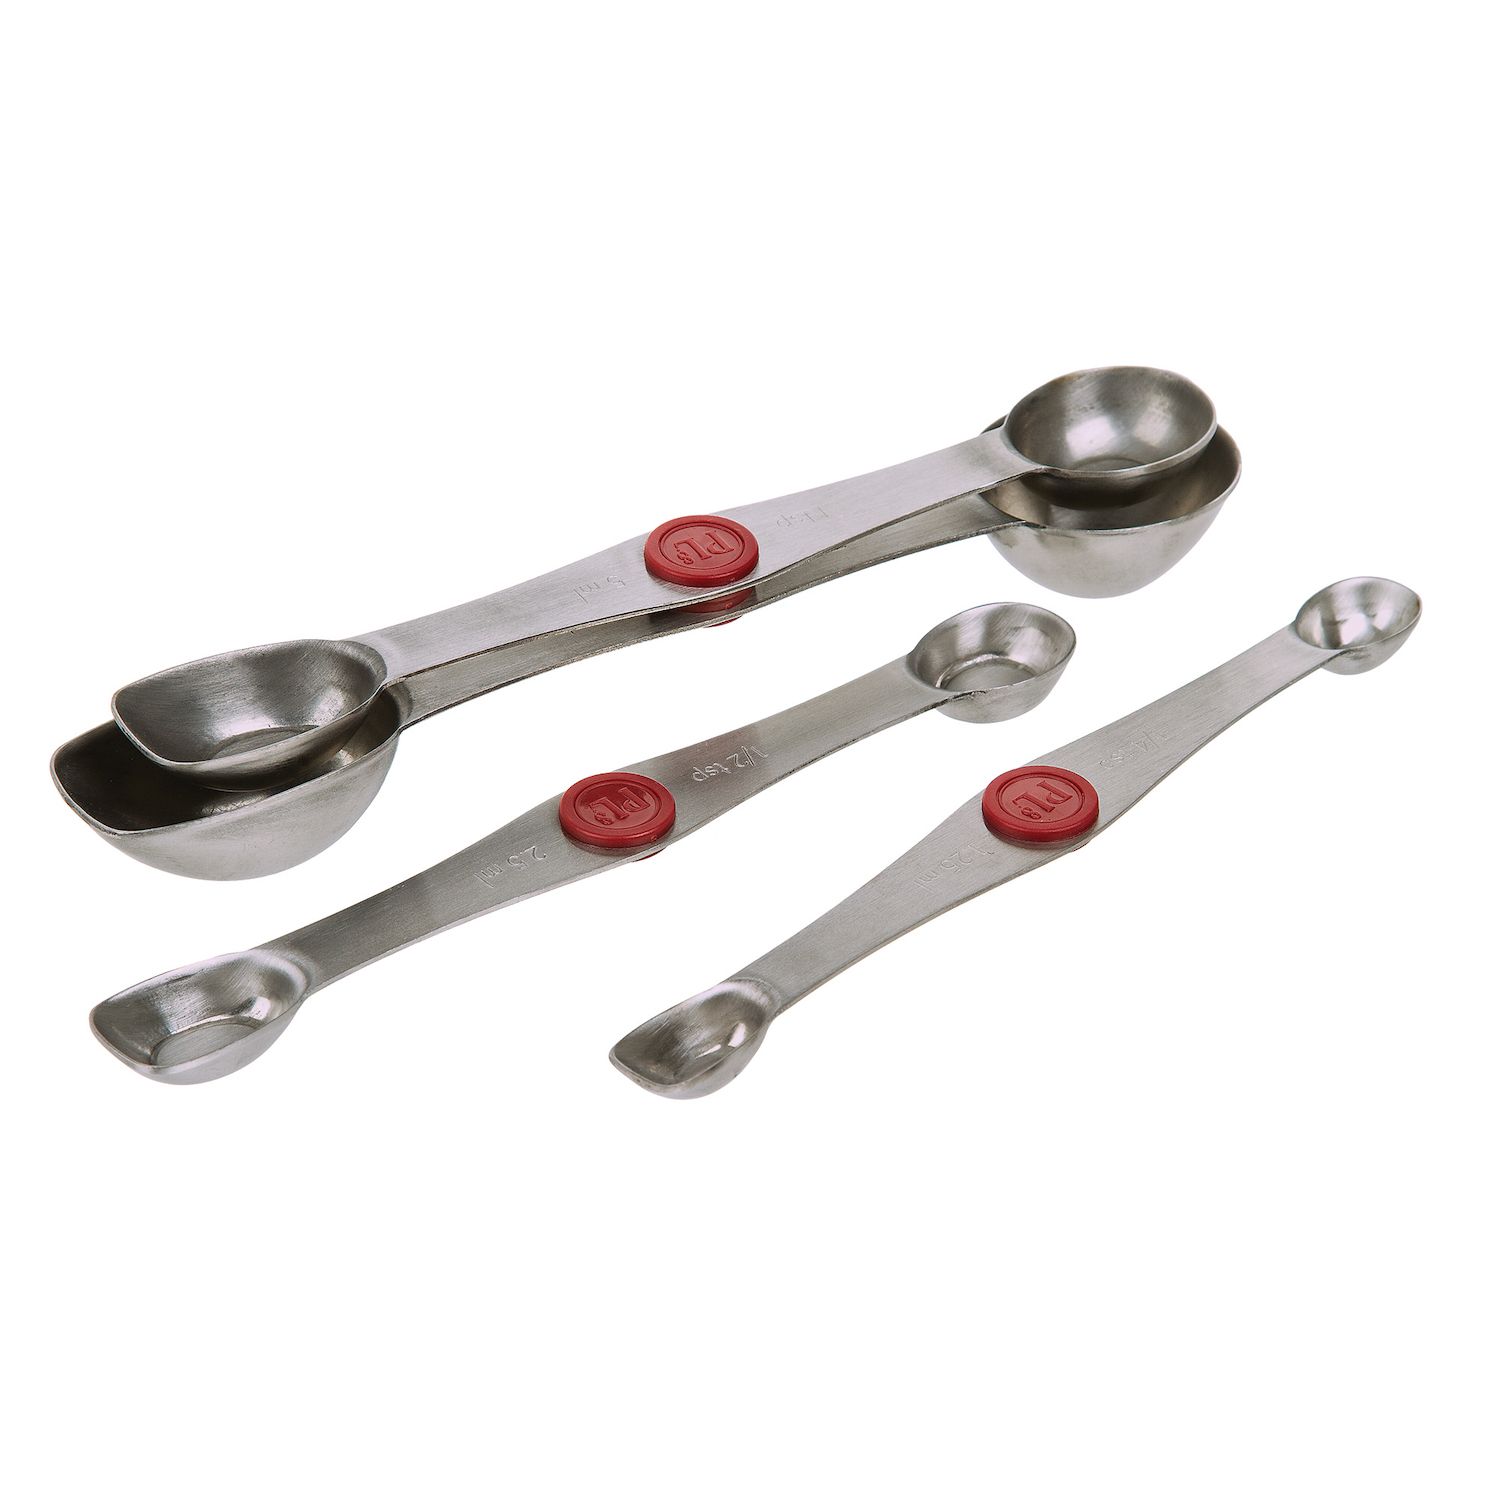 2 Lb Depot Black Measuring Spoons Set of 7 - Bonus Leveler, Rust